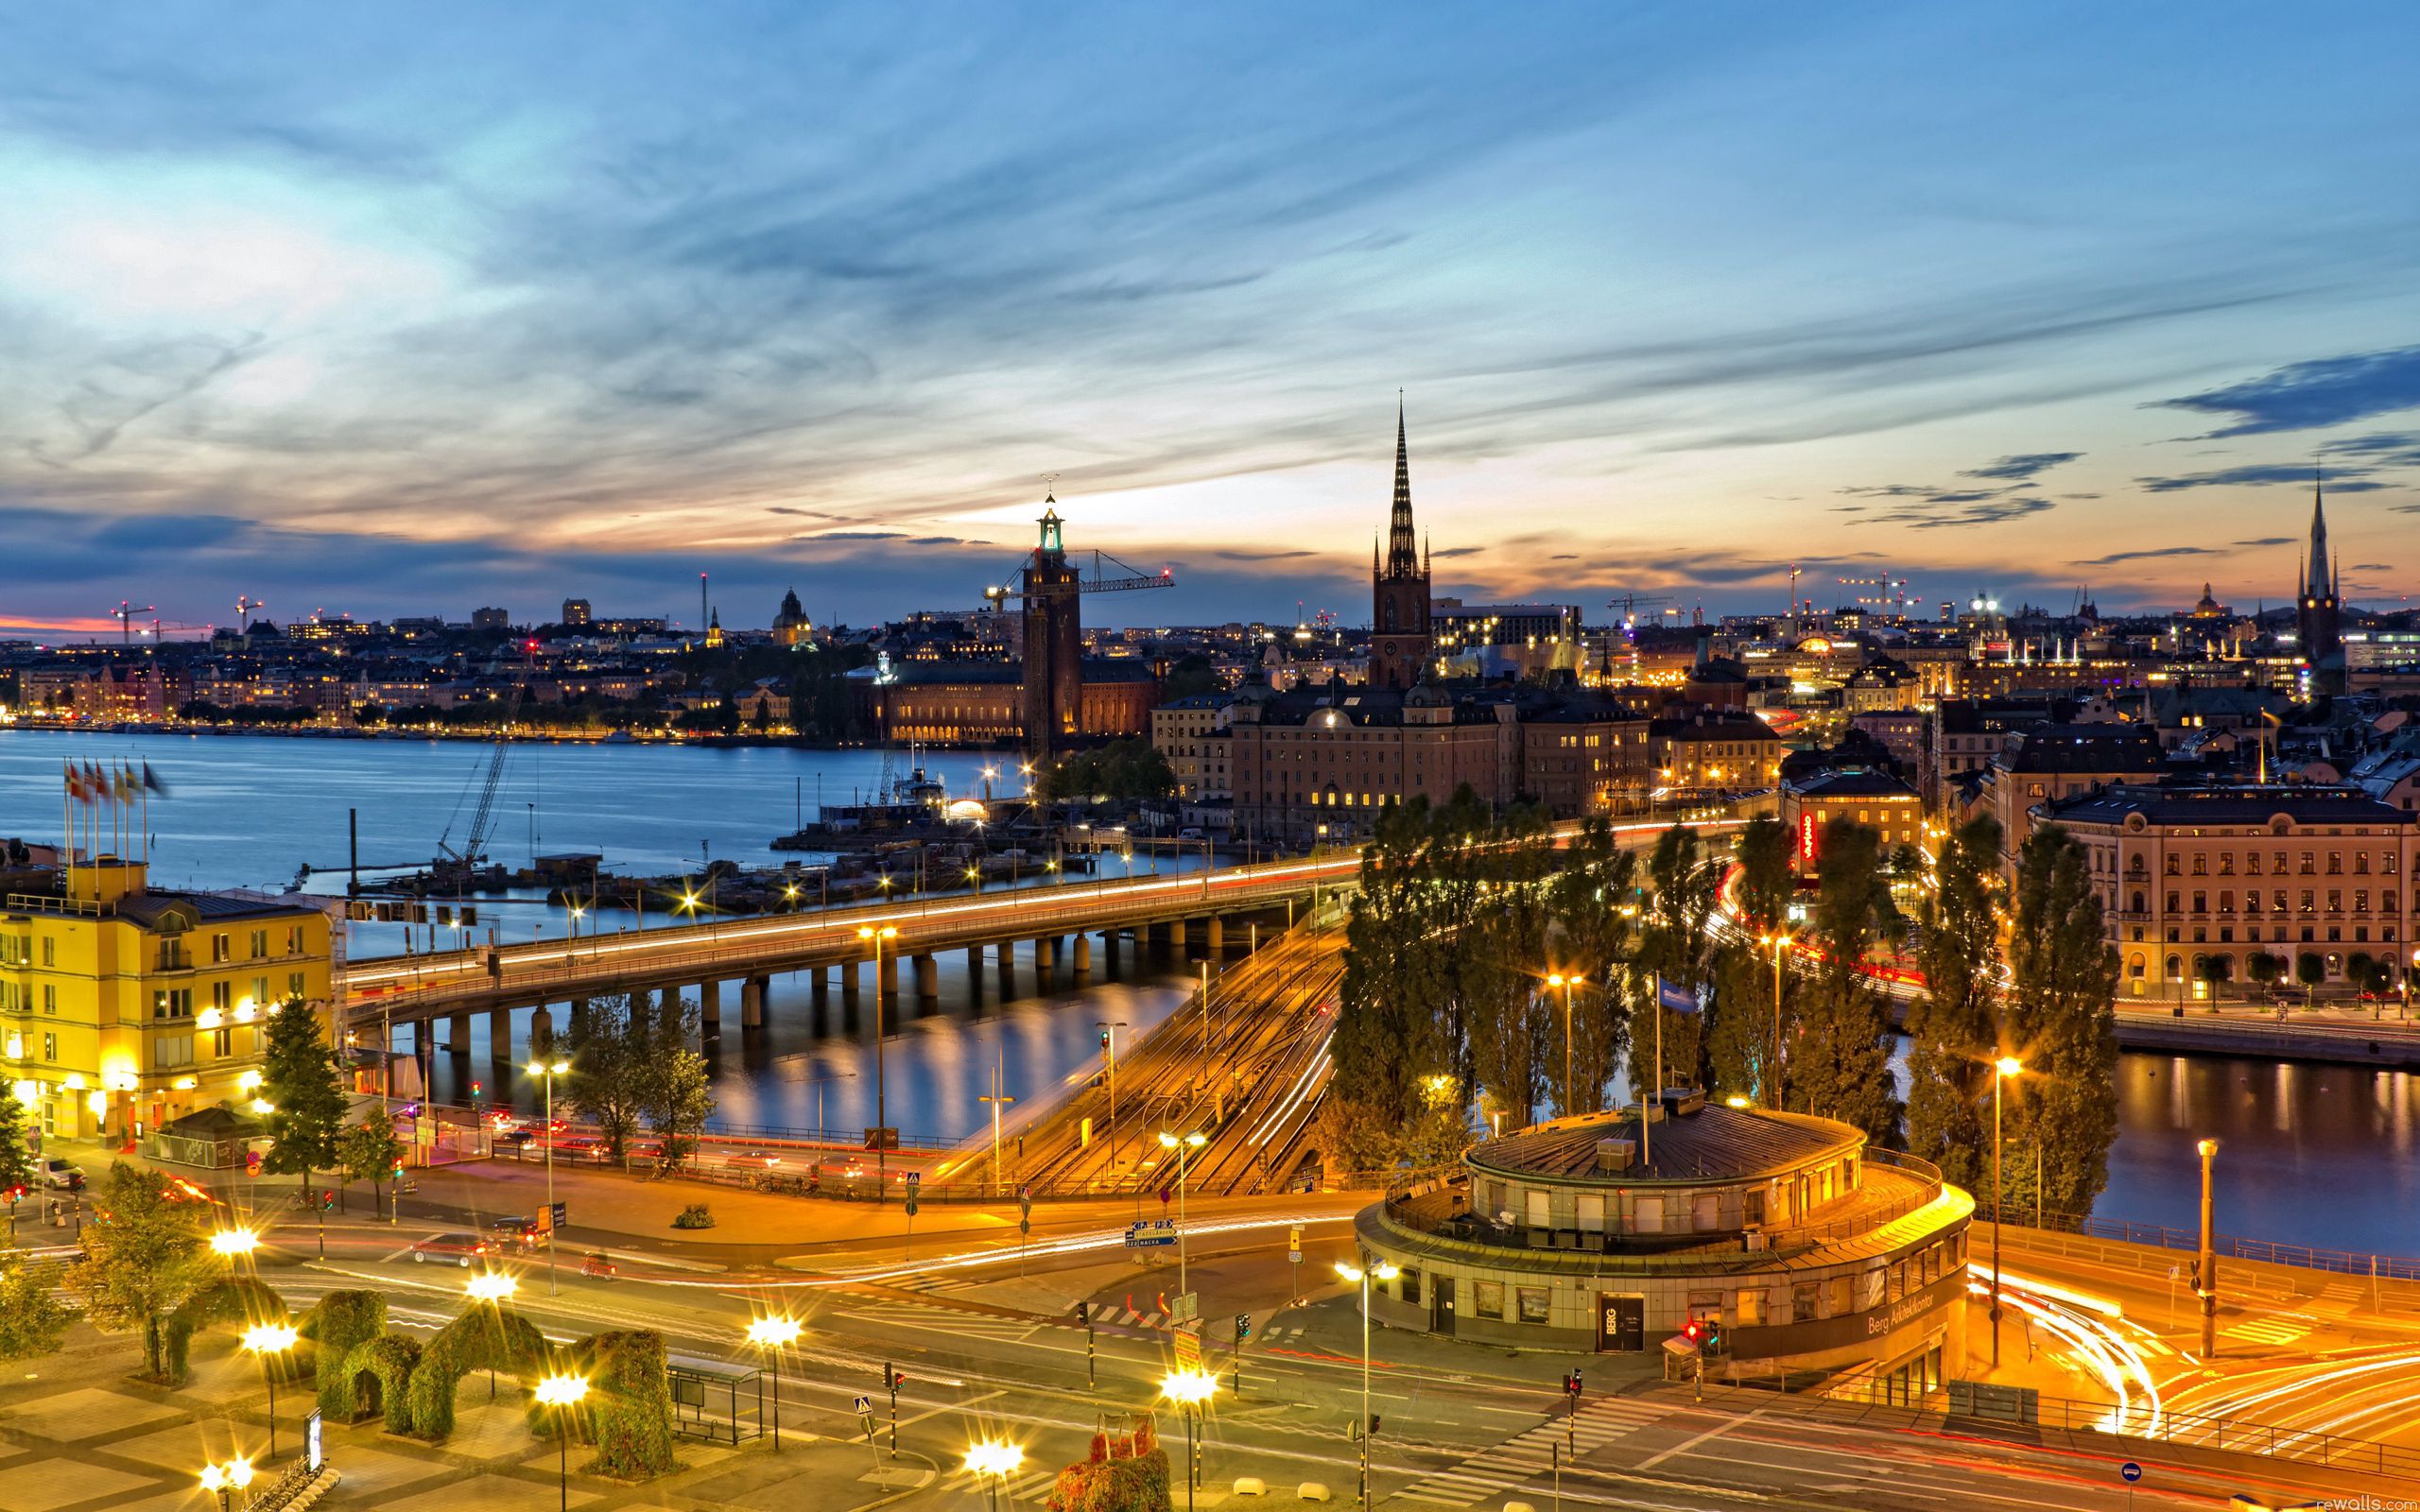 Hdデスクトップ 壁紙 都市 街の明かり シティライツ イブニング 夕方 スウェーデン ストックホルムダウンロード無料画像